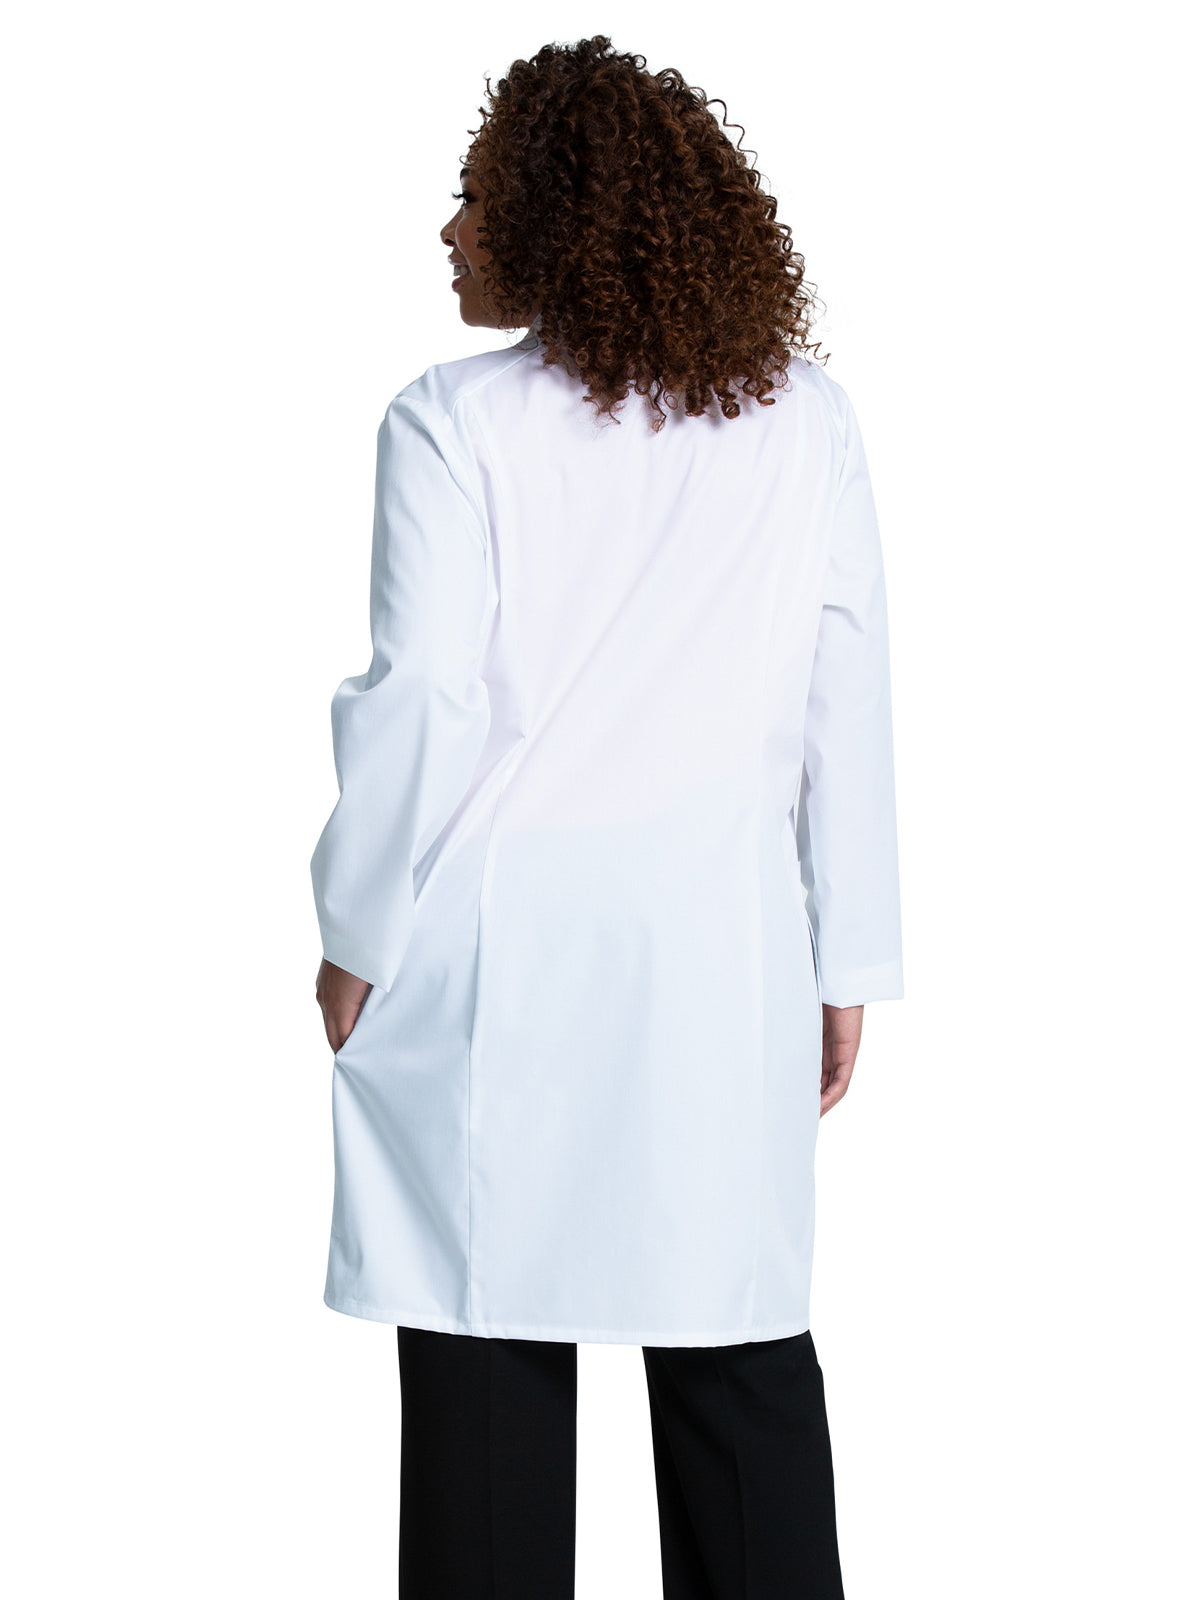 Women's Three-Pocket 37" Full-Length Lab Coat